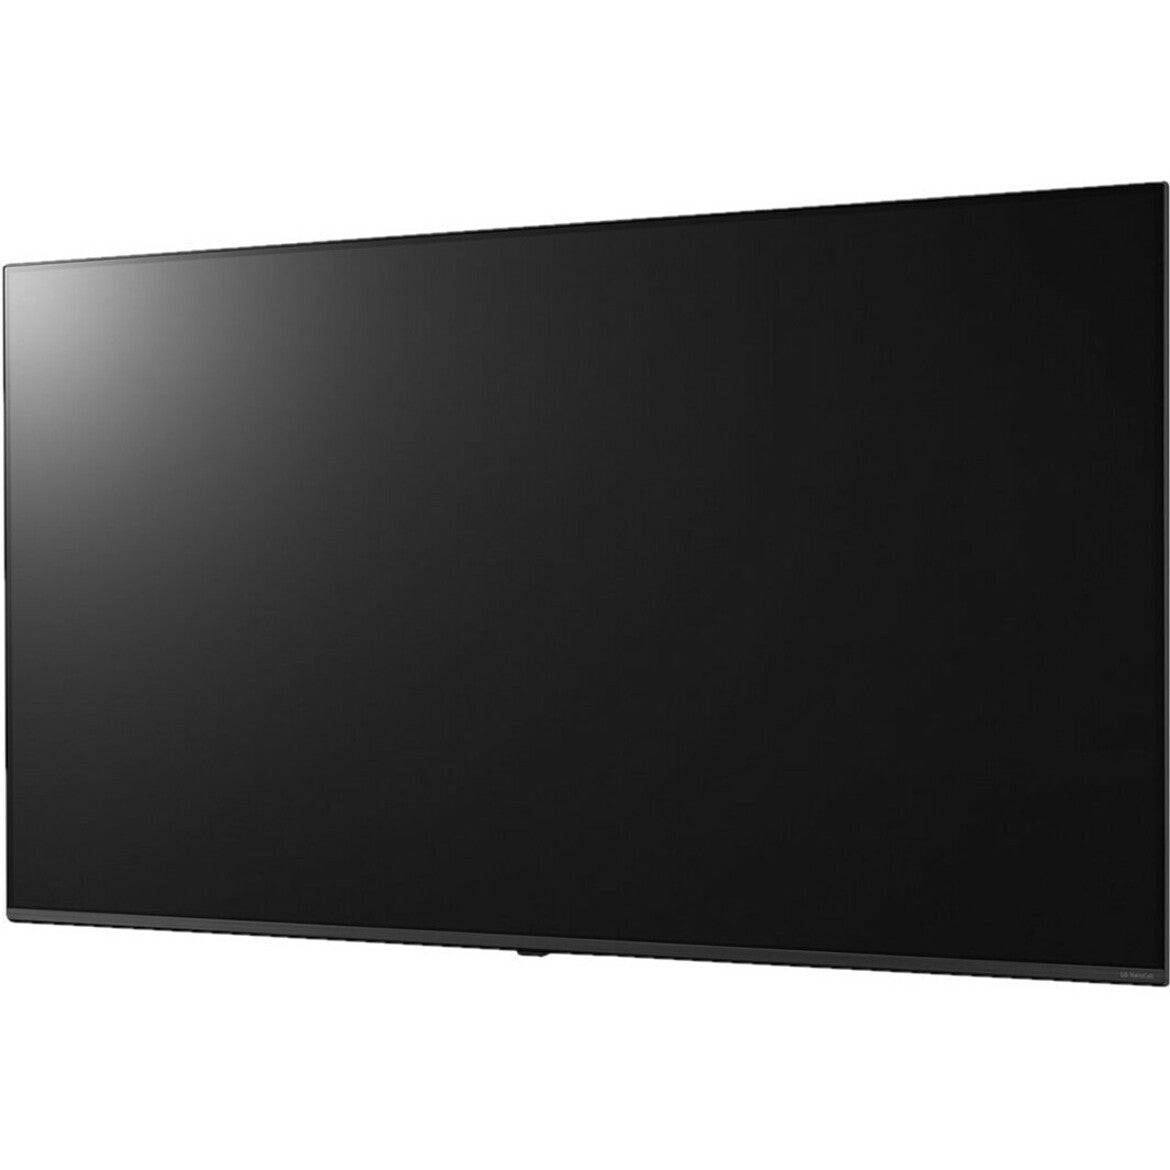 LG Hospitality UR760H 65UR760H9UD 65" Smart LED-LCD TV - 4K UHDTV - Navy Blue